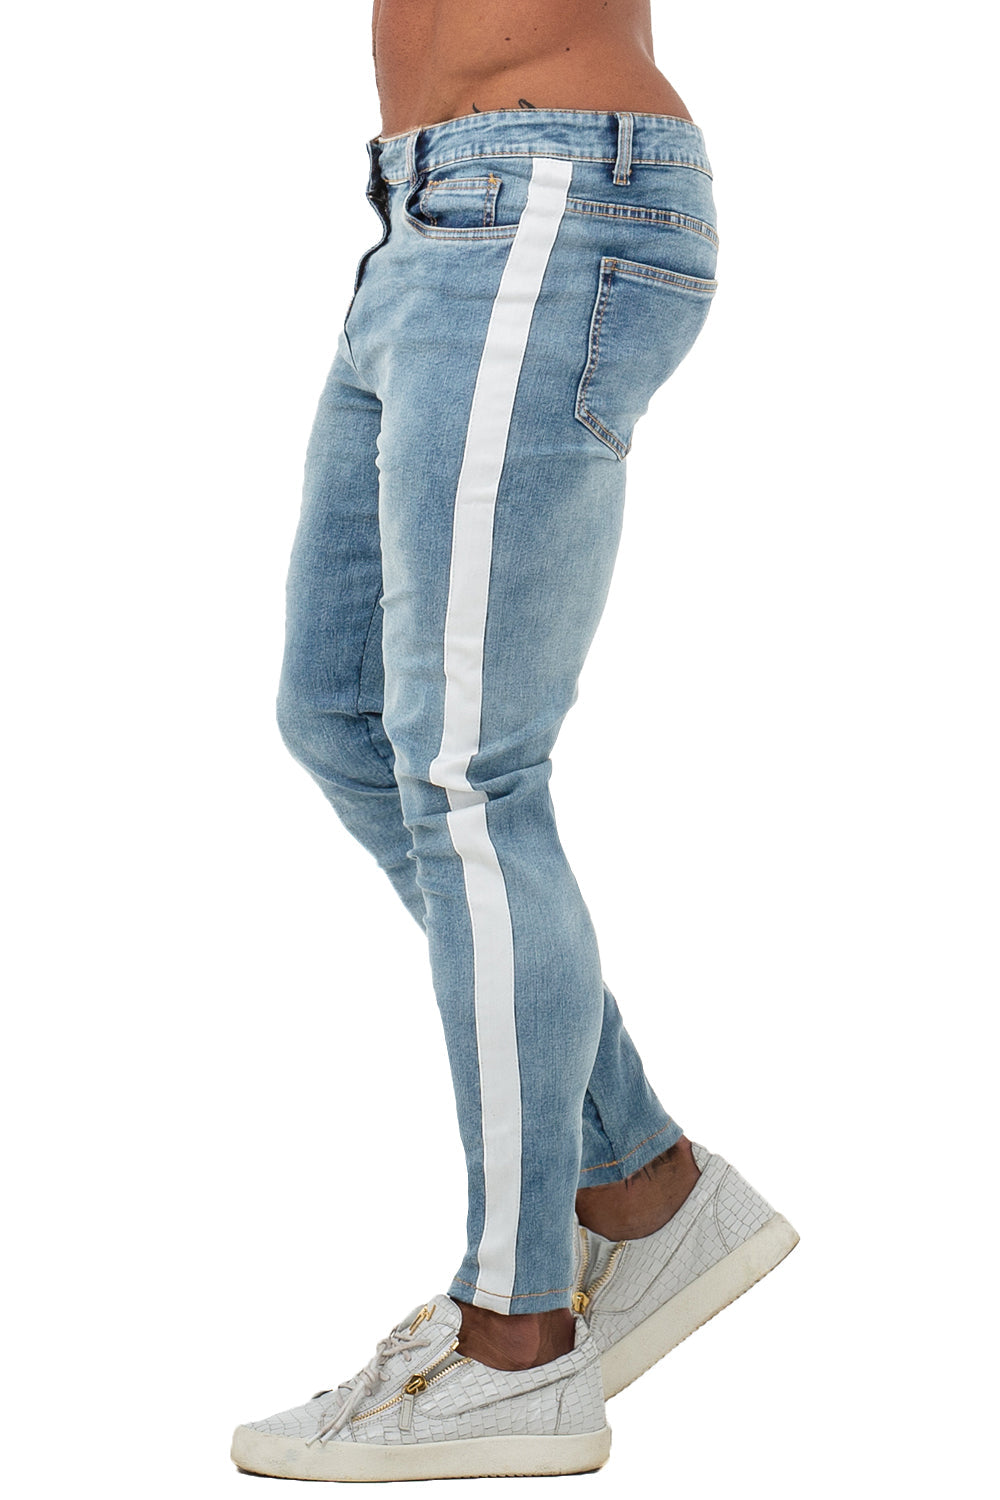 GINGTTO NEW Mens Skinny Jeans Side Stripes Stretch Jeans